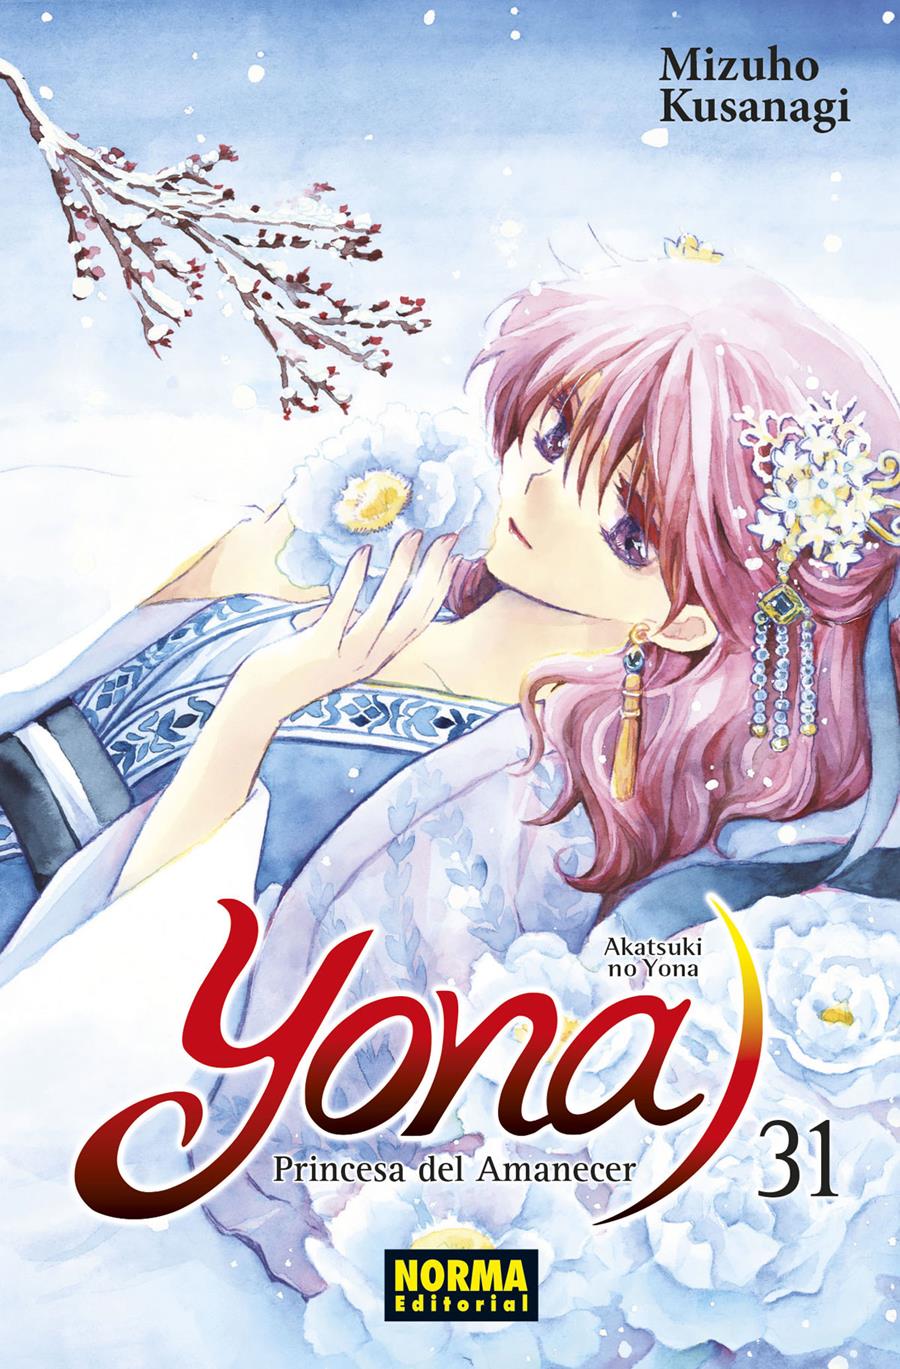 Yona 31, Princesa del Amanecer | N0621-NOR24 | Mizuho Kusanagi | Terra de Còmic - Tu tienda de cómics online especializada en cómics, manga y merchandising